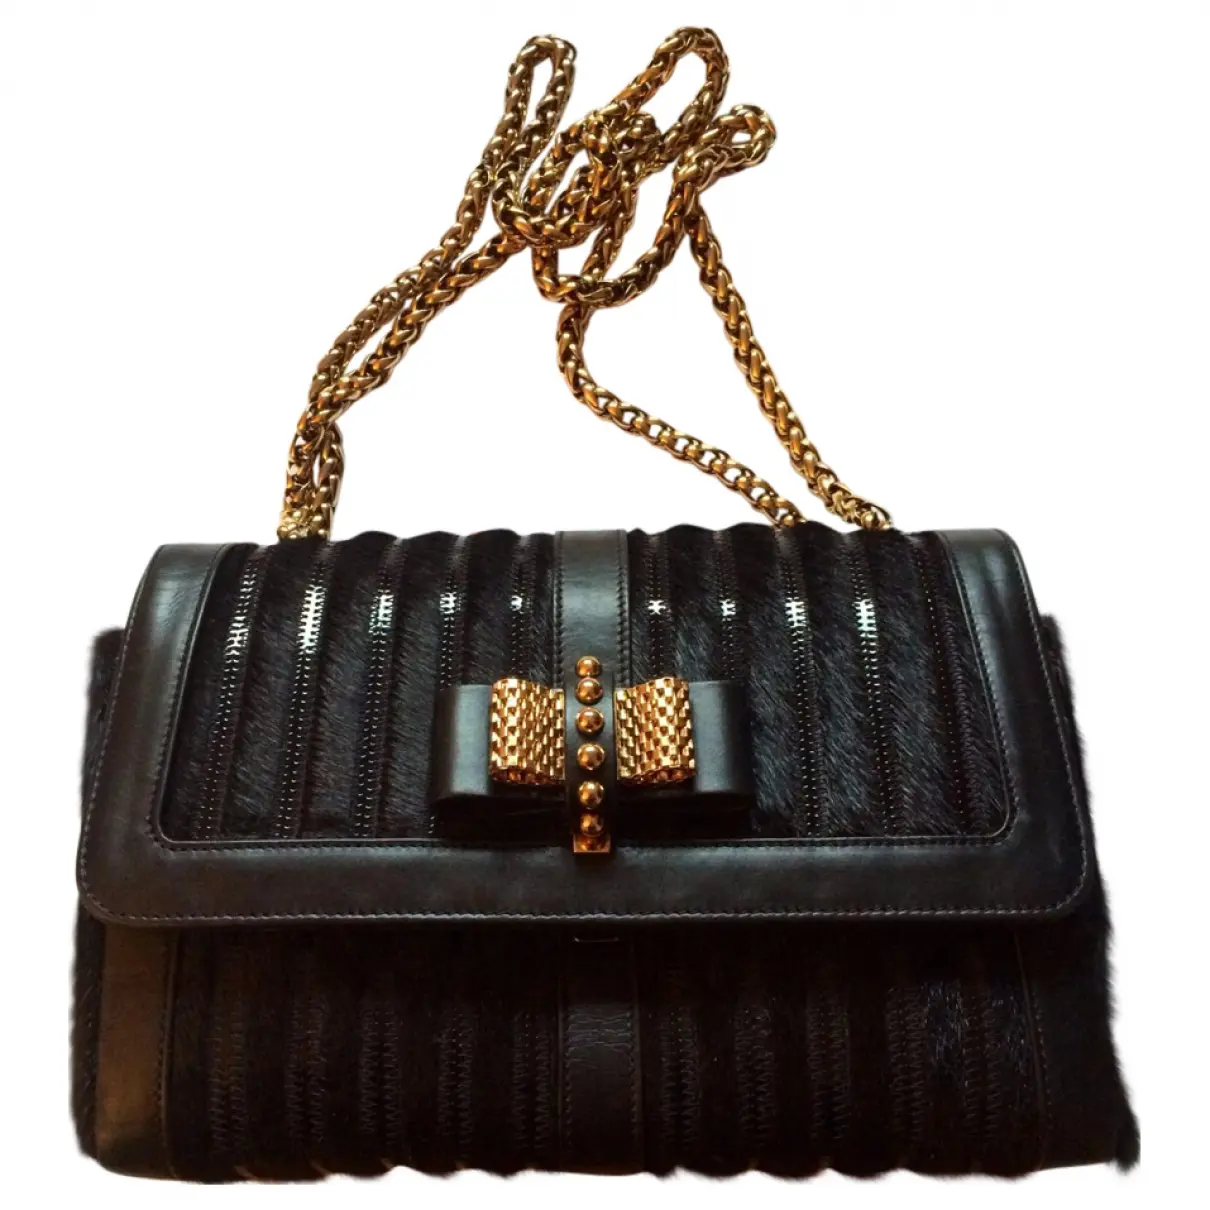 Black Leather Handbag Christian Louboutin